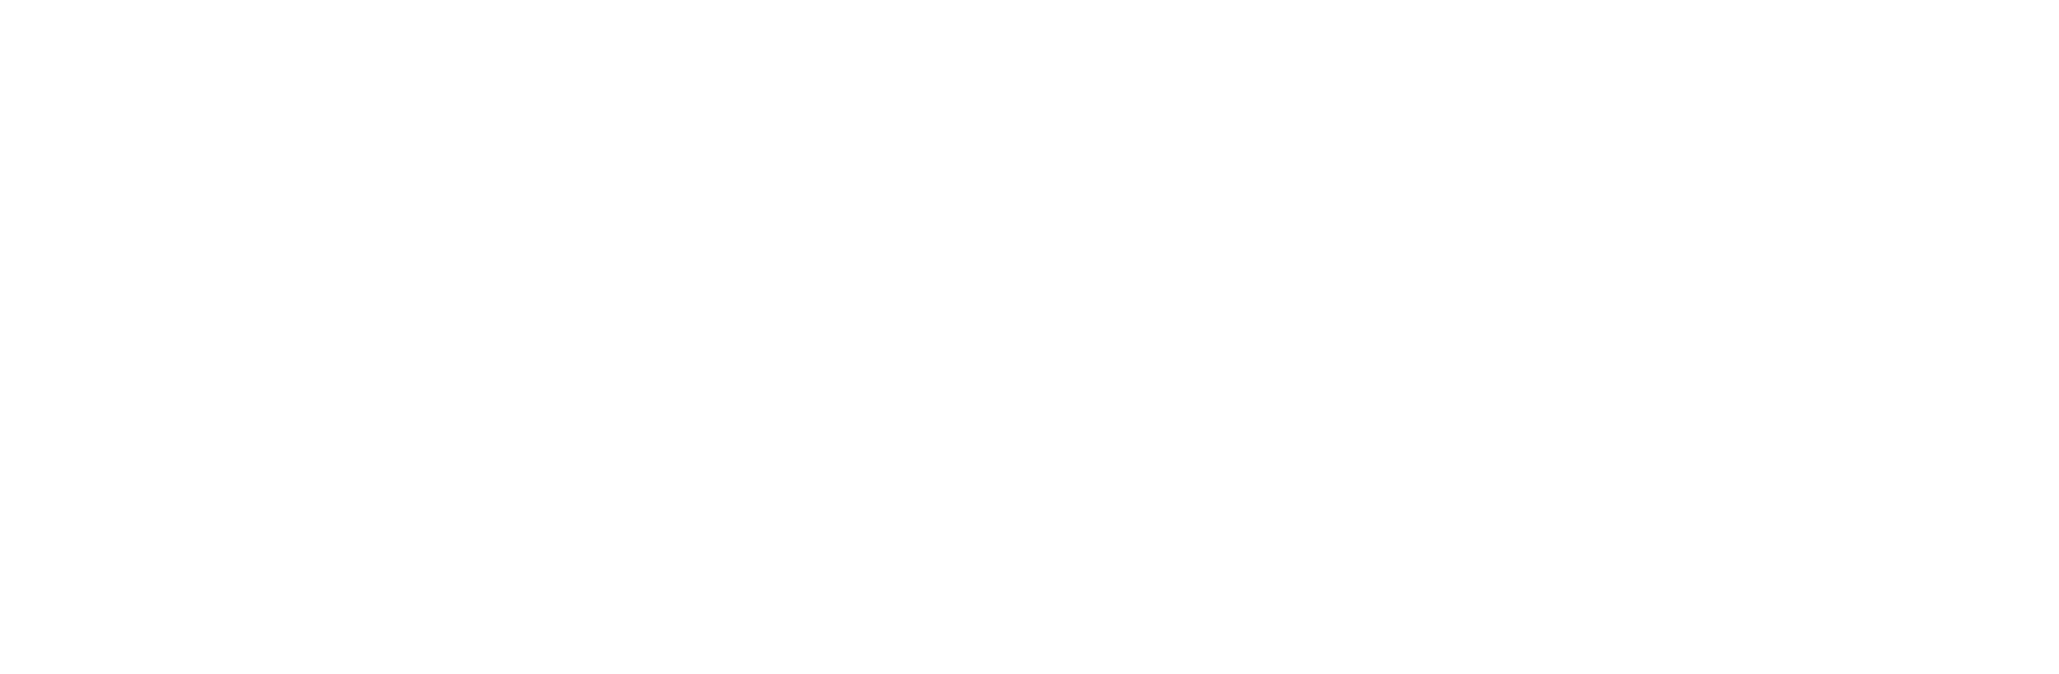 Logos IRIS PNG - pour le web